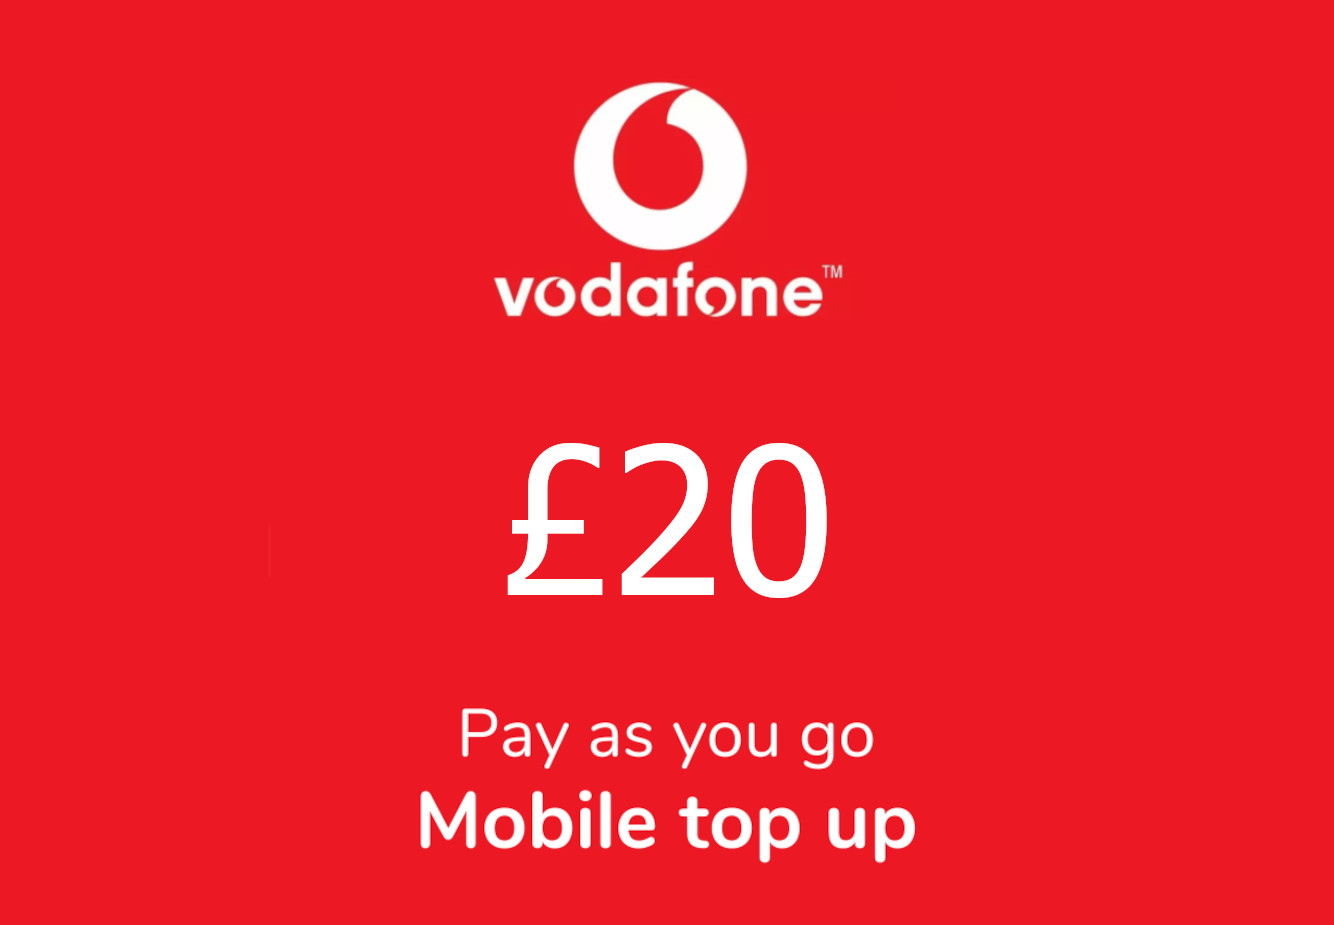 Vodafone £20 Mobile Top-up UK